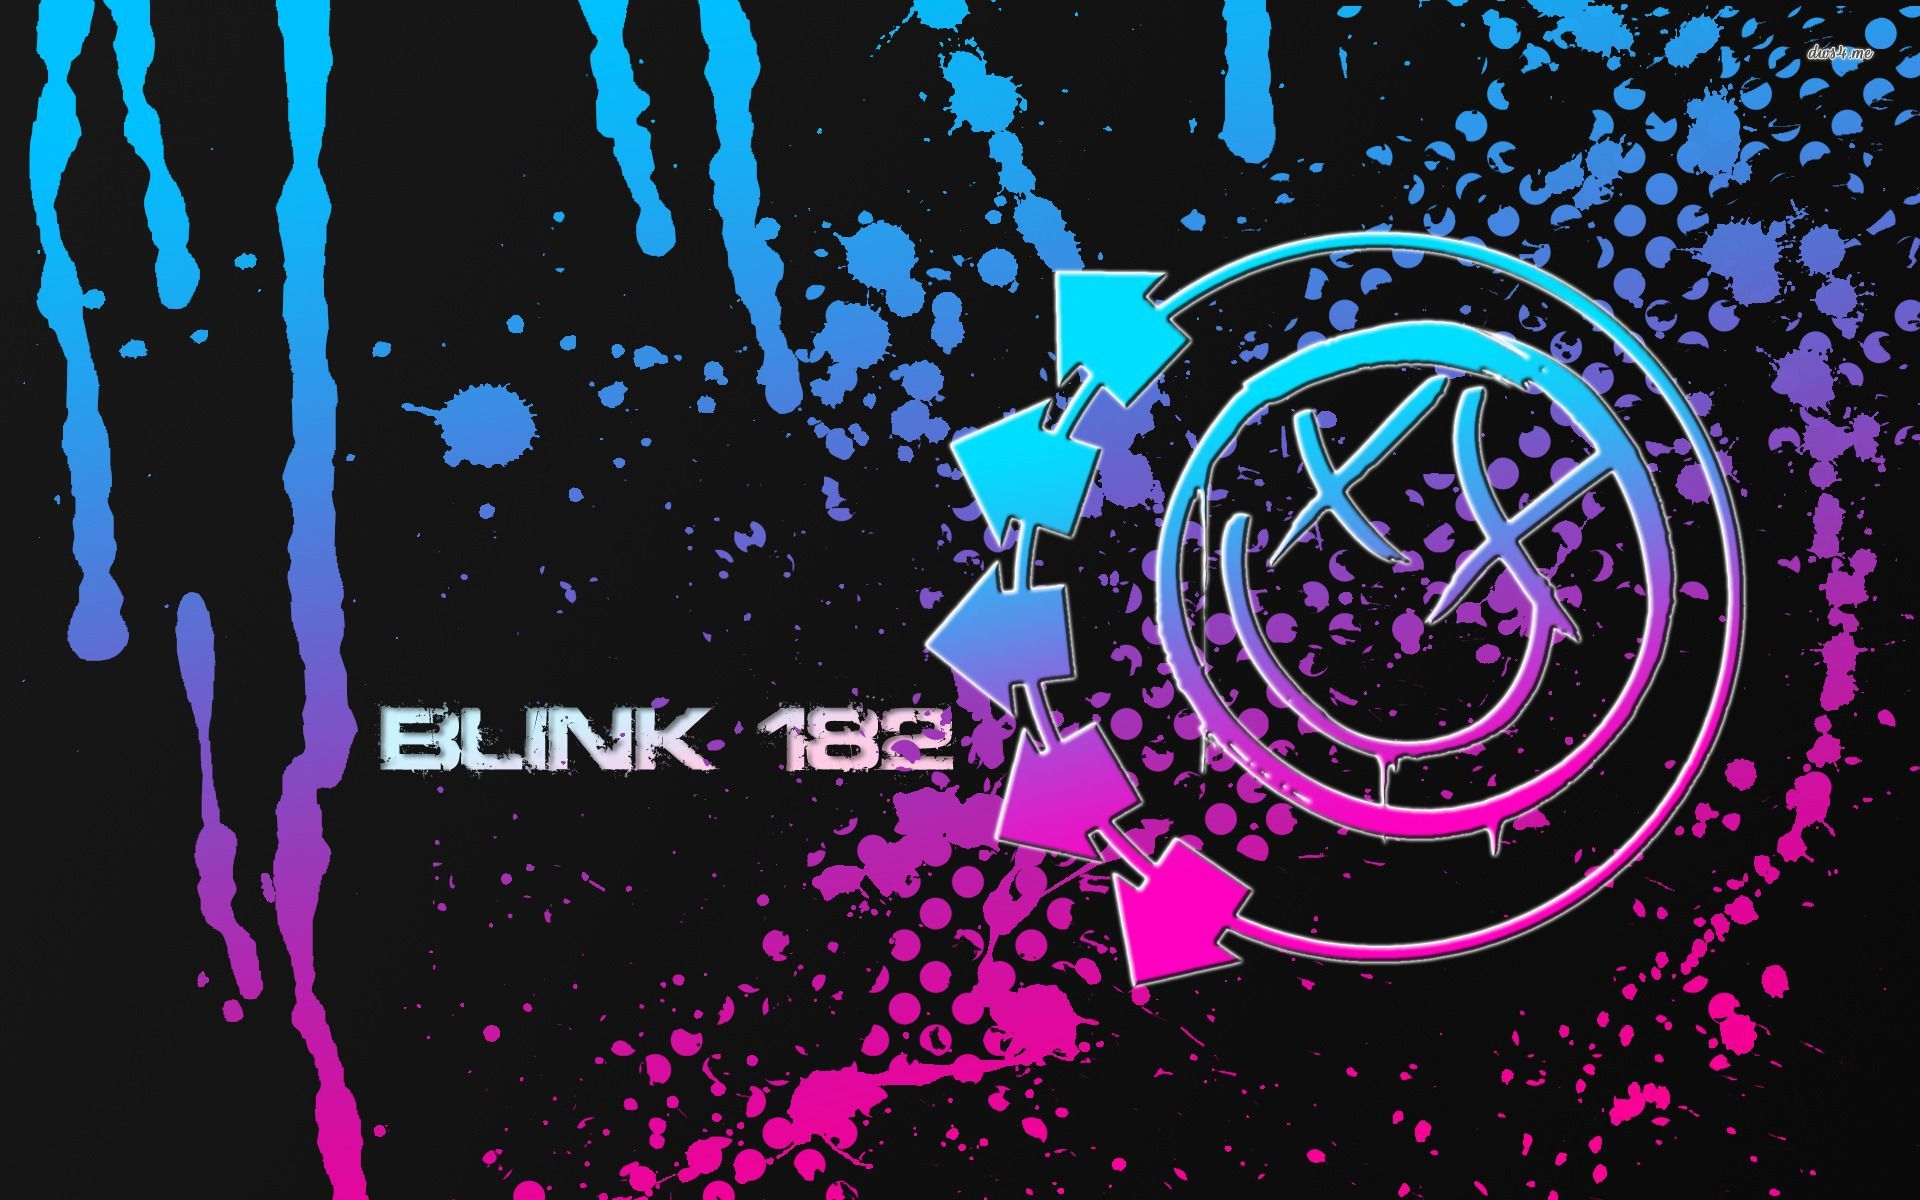 Blink 182 wallpaper - Music wallpapers - #6734